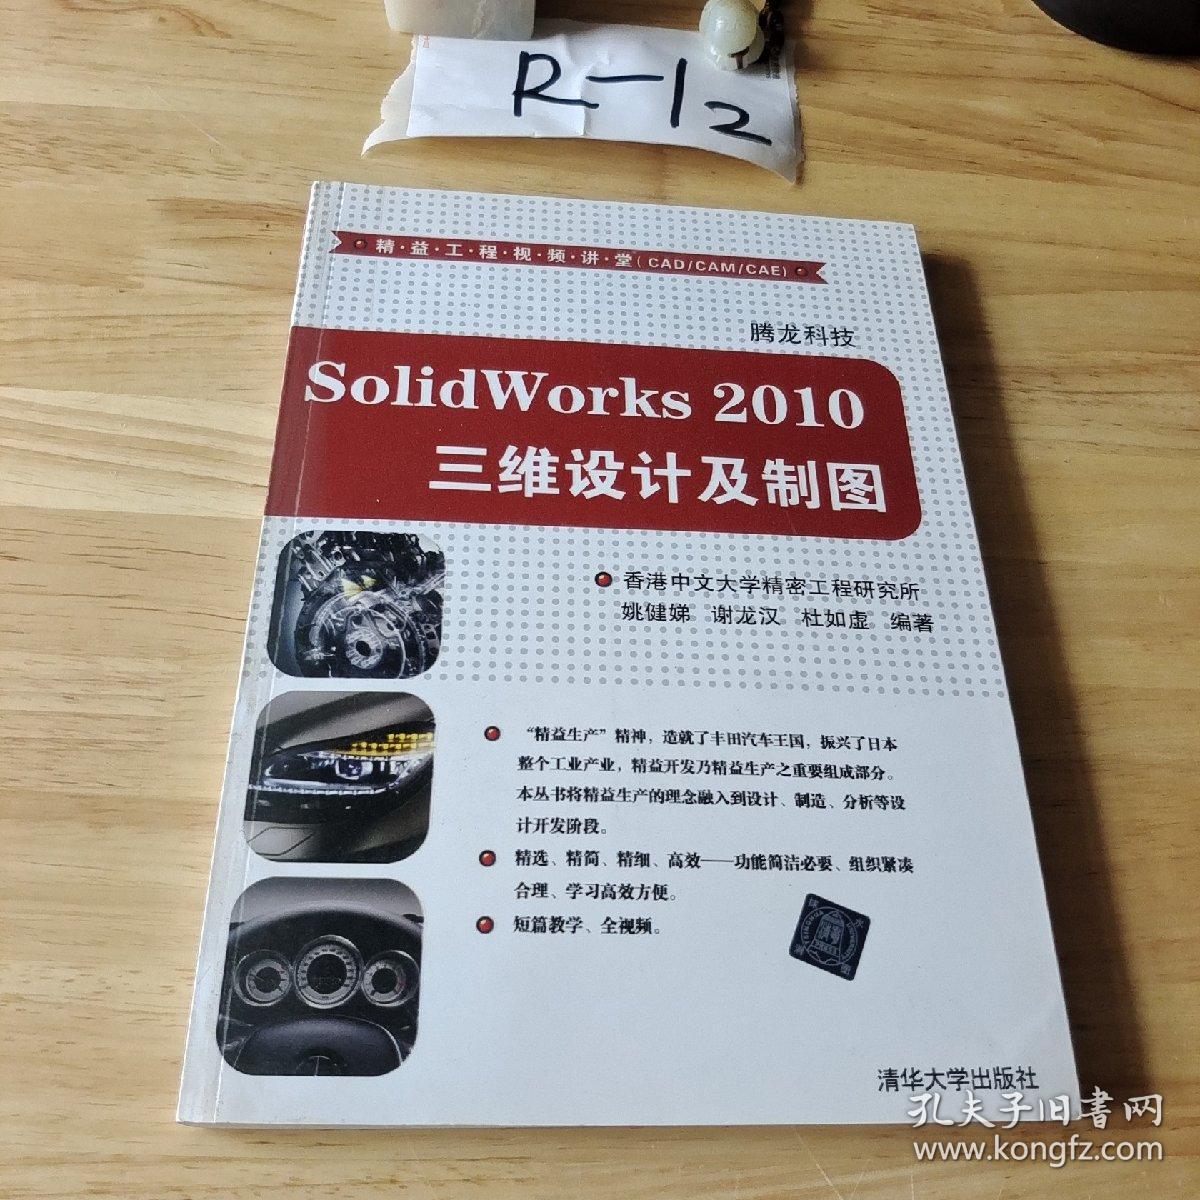 SolidWorks 2010三维设计及制图  有盘